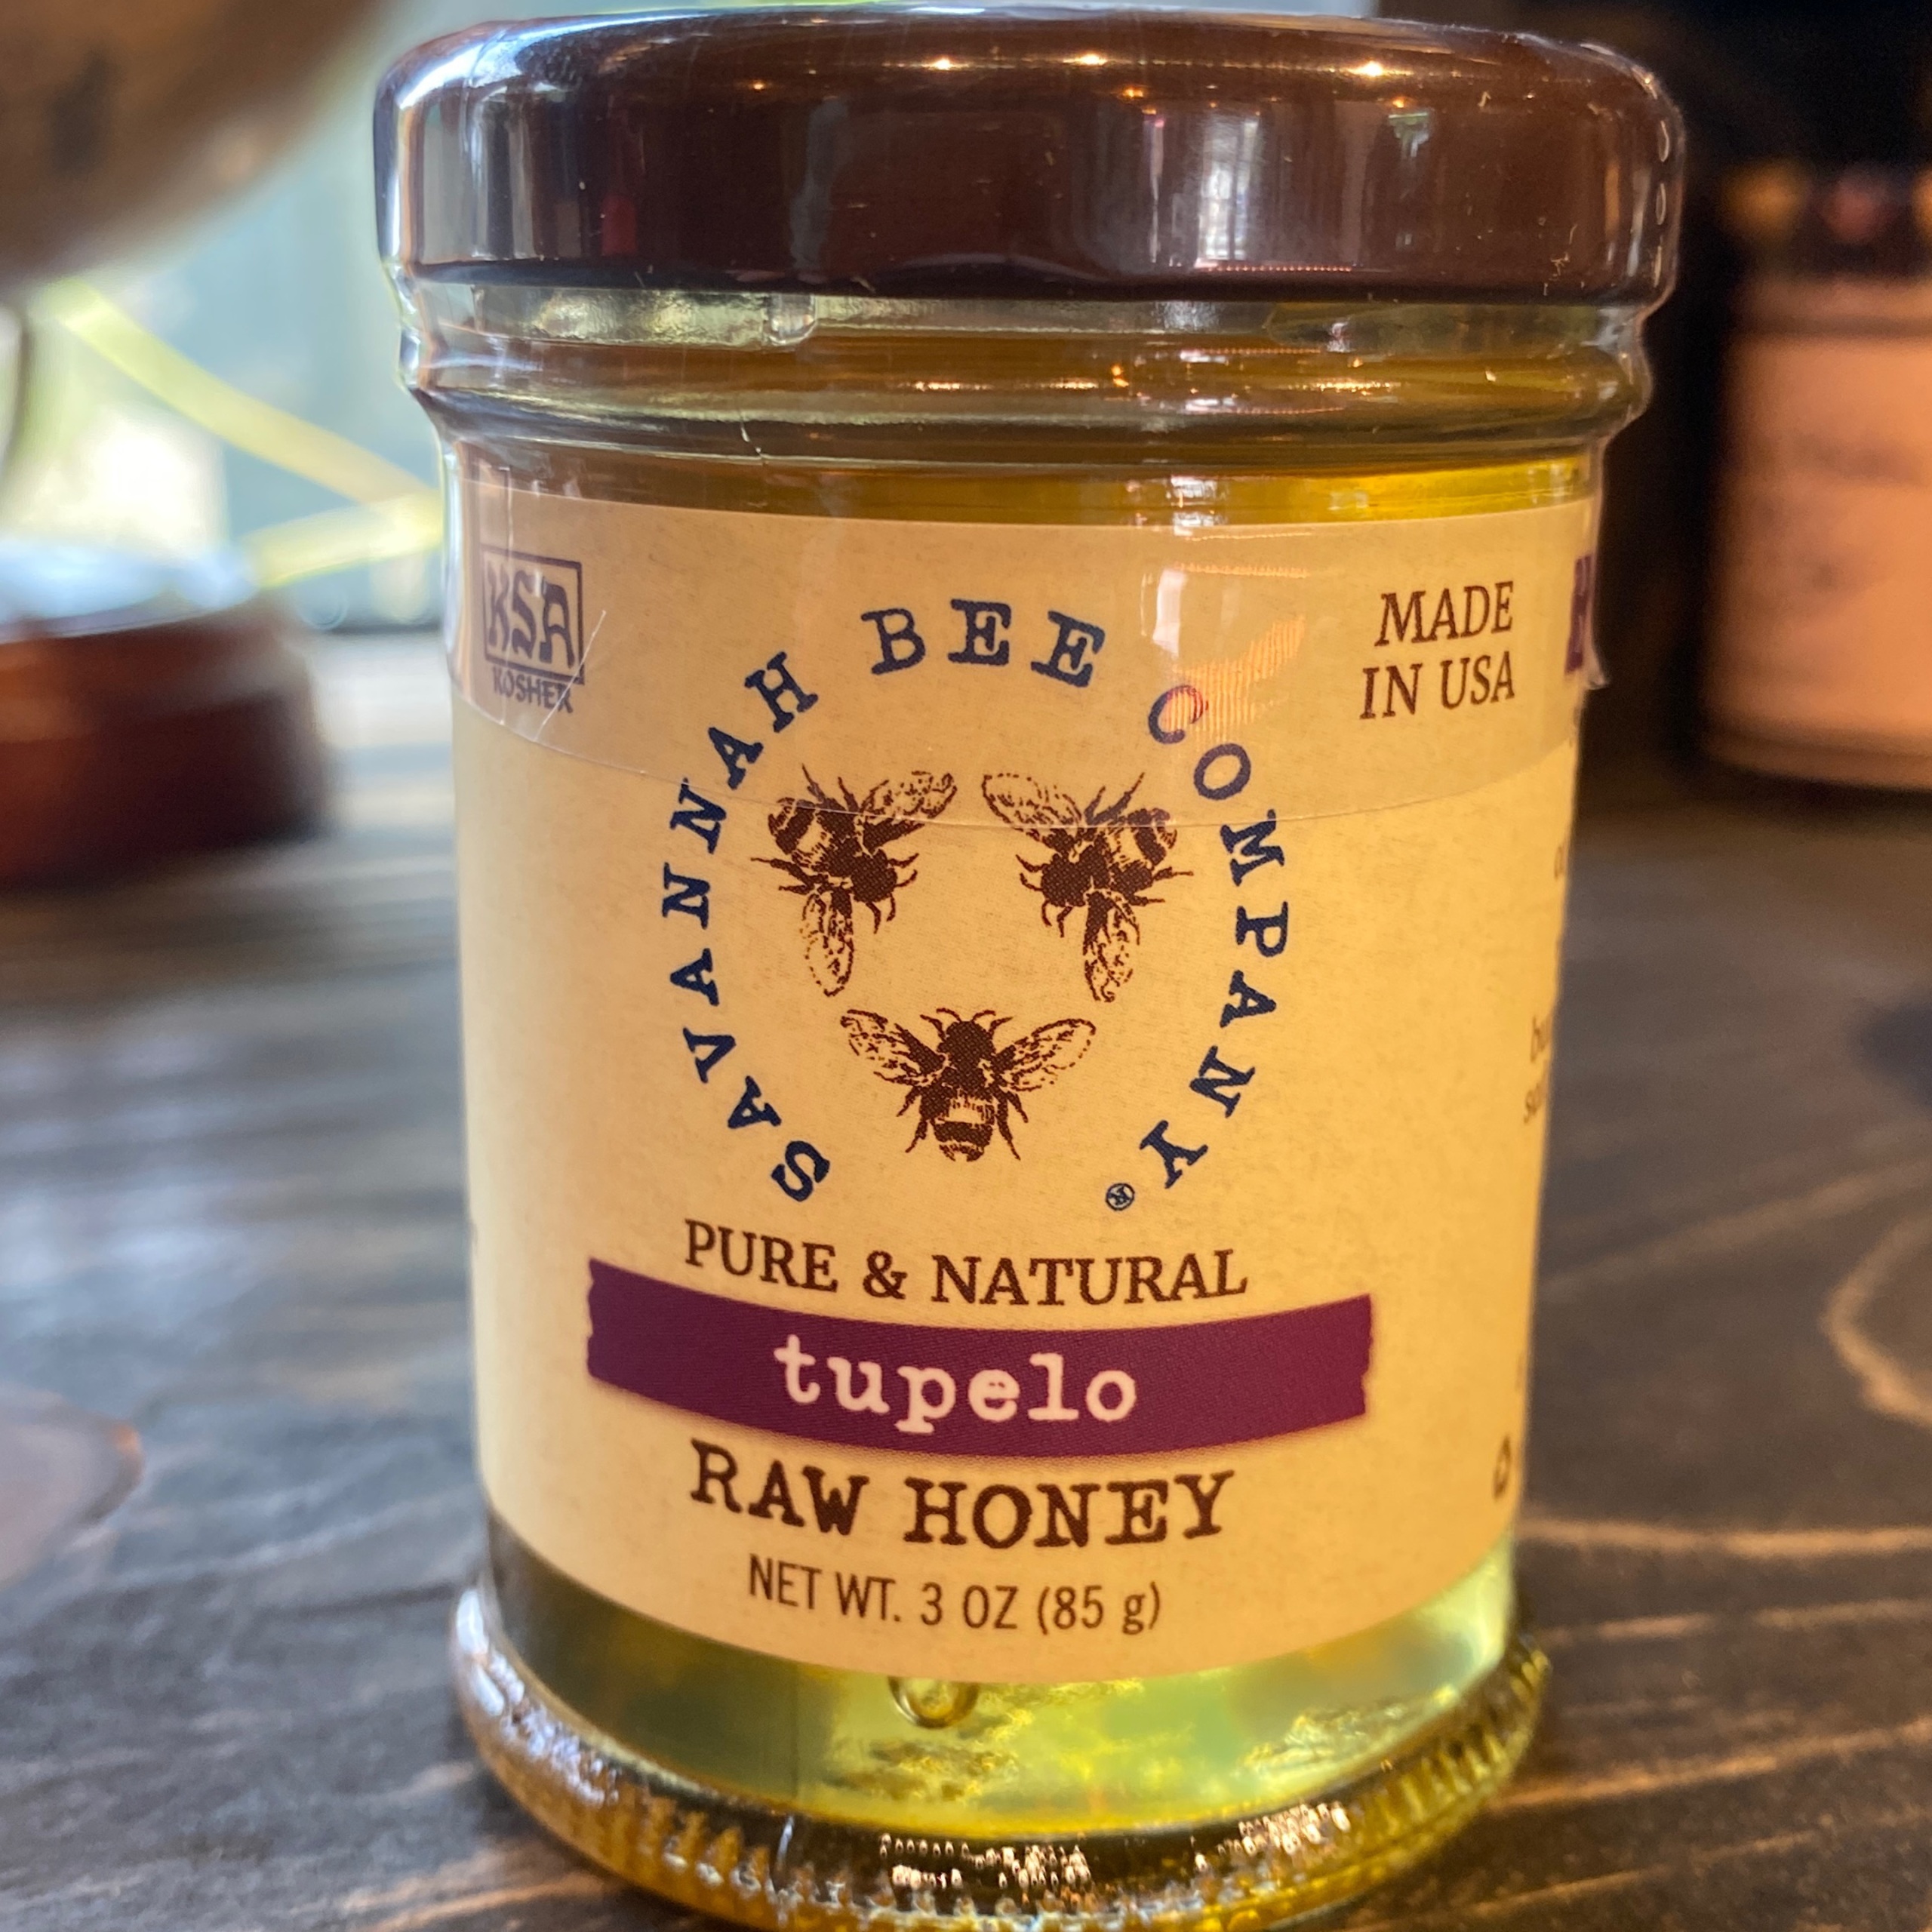 Savannah Bee Company Whipped Lemon Honey